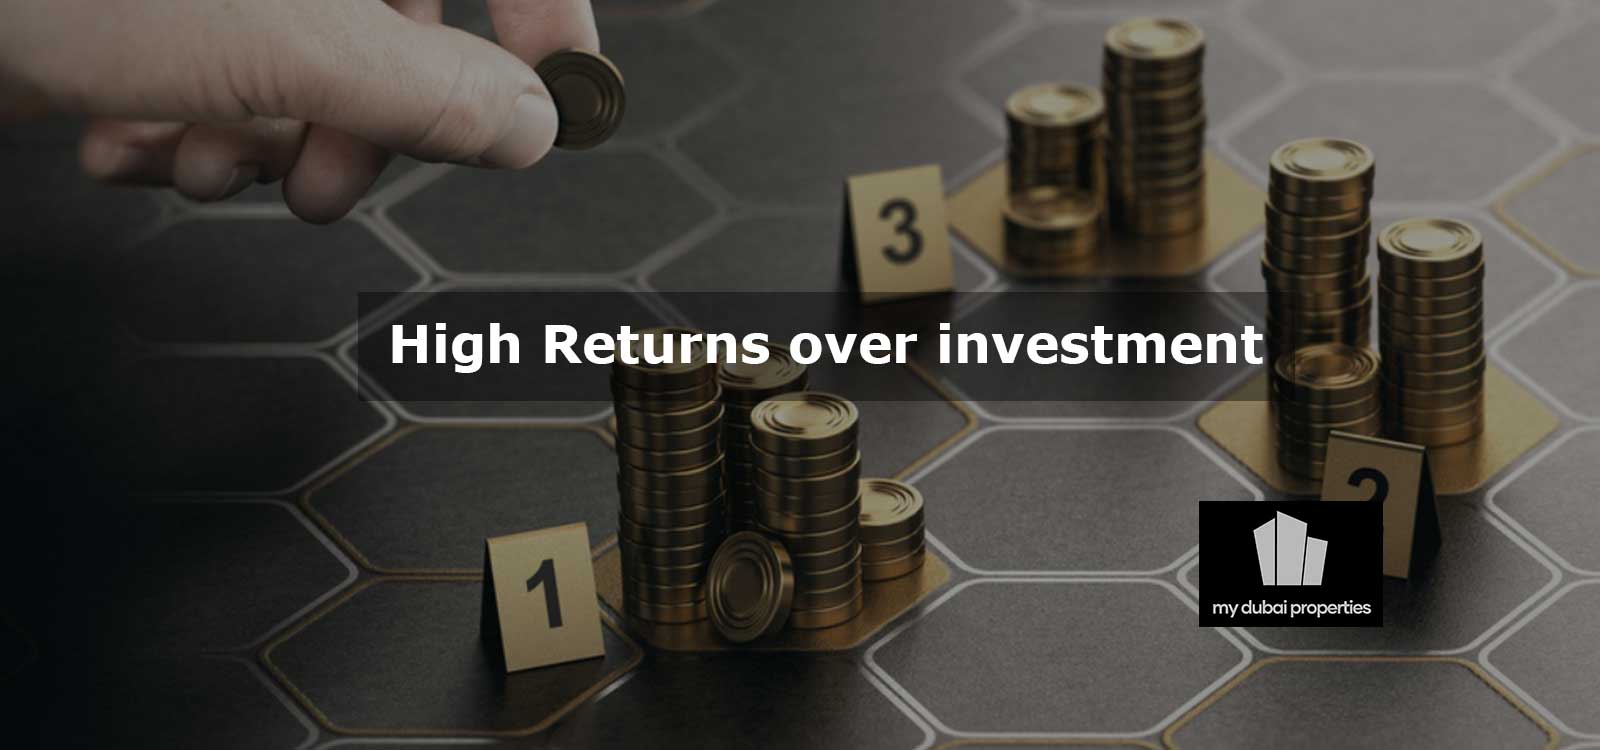 High Returns over investment